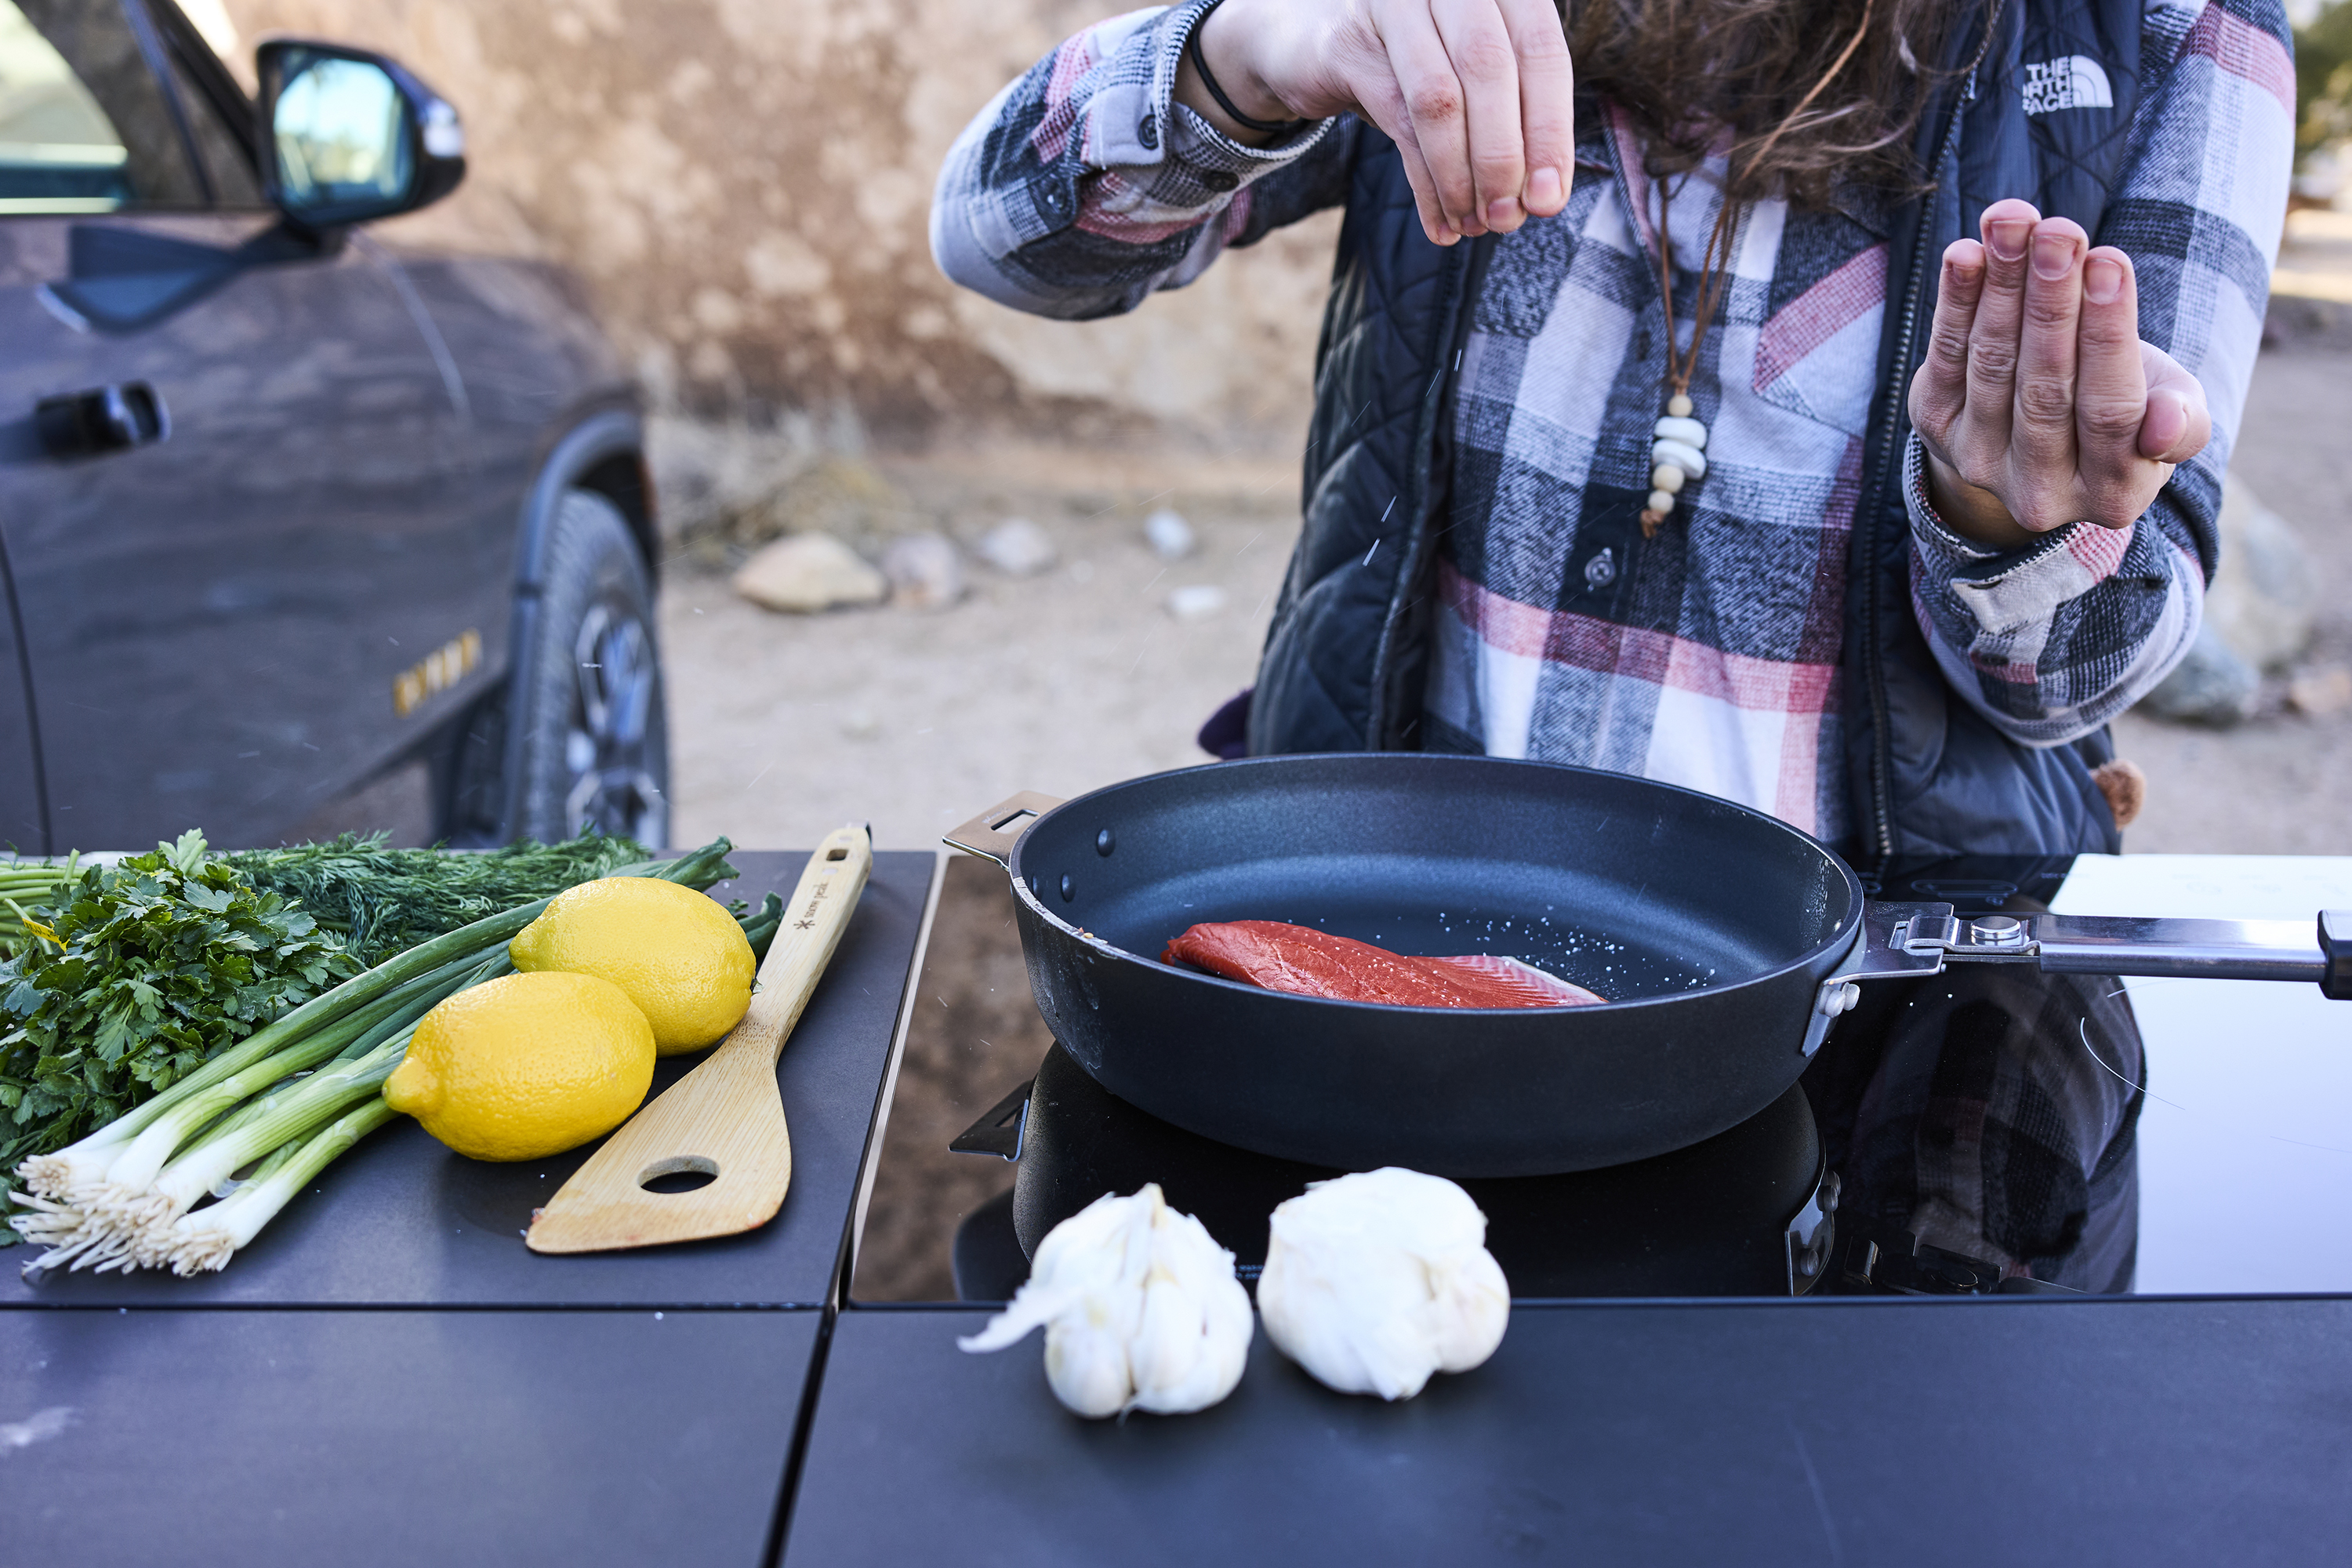 Anyone else use a wok while camping?? : r/camping